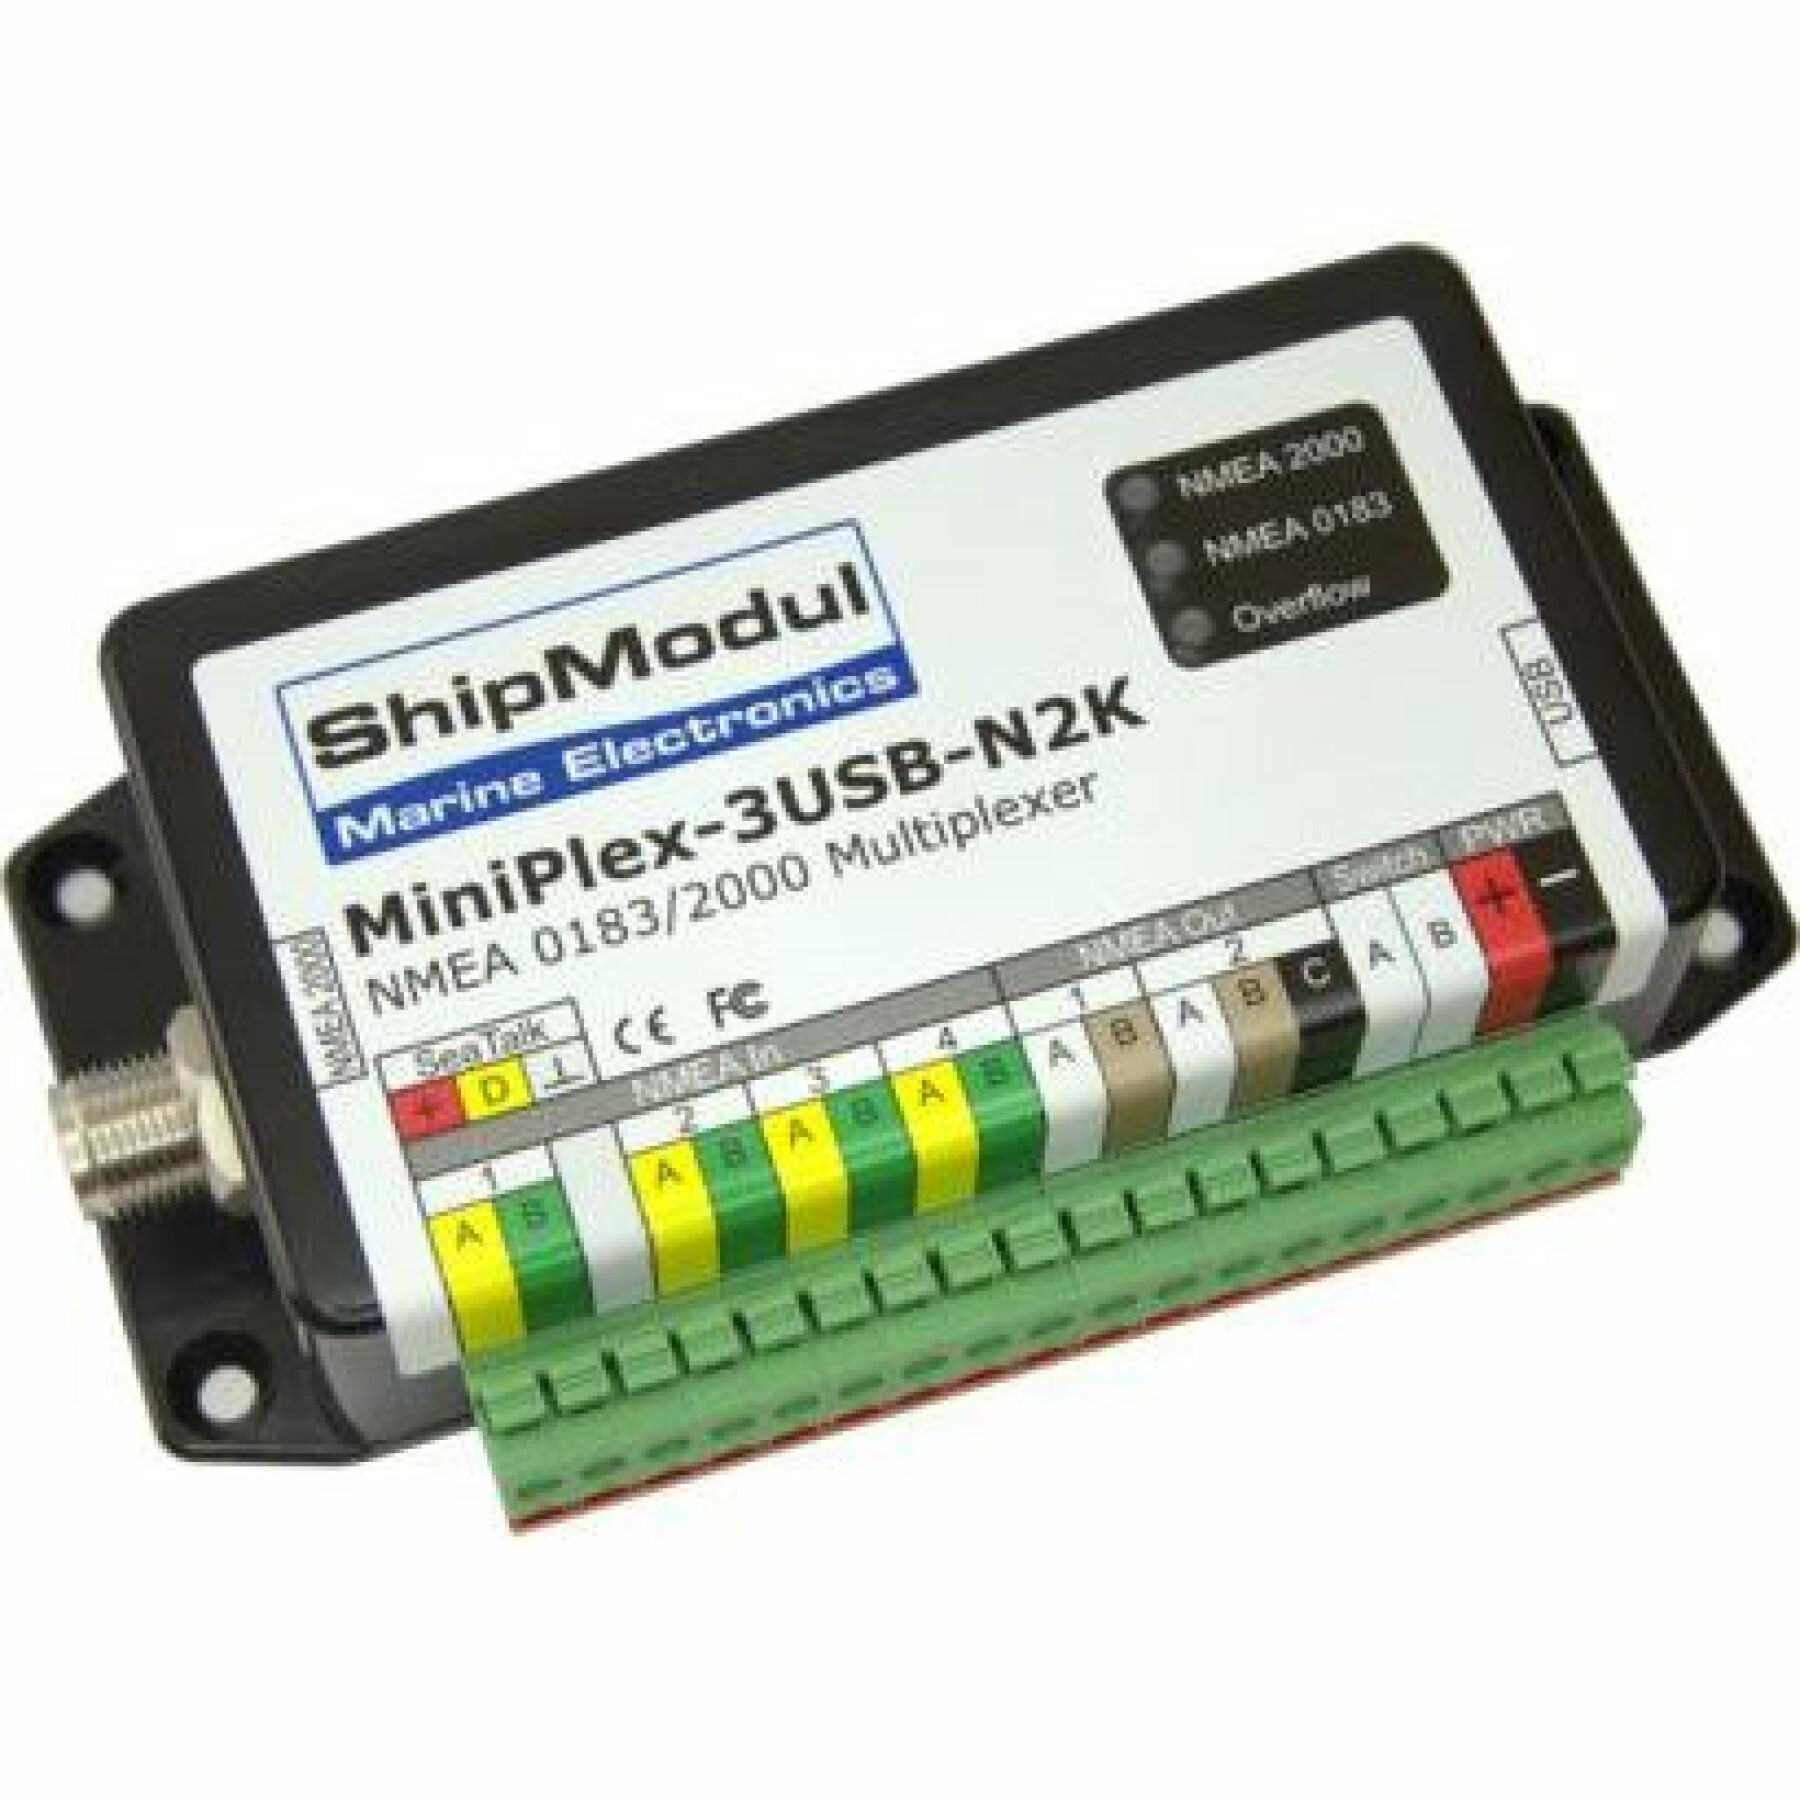 Multiplexor usb versión ShipModul Miniplex-3USB-N2K